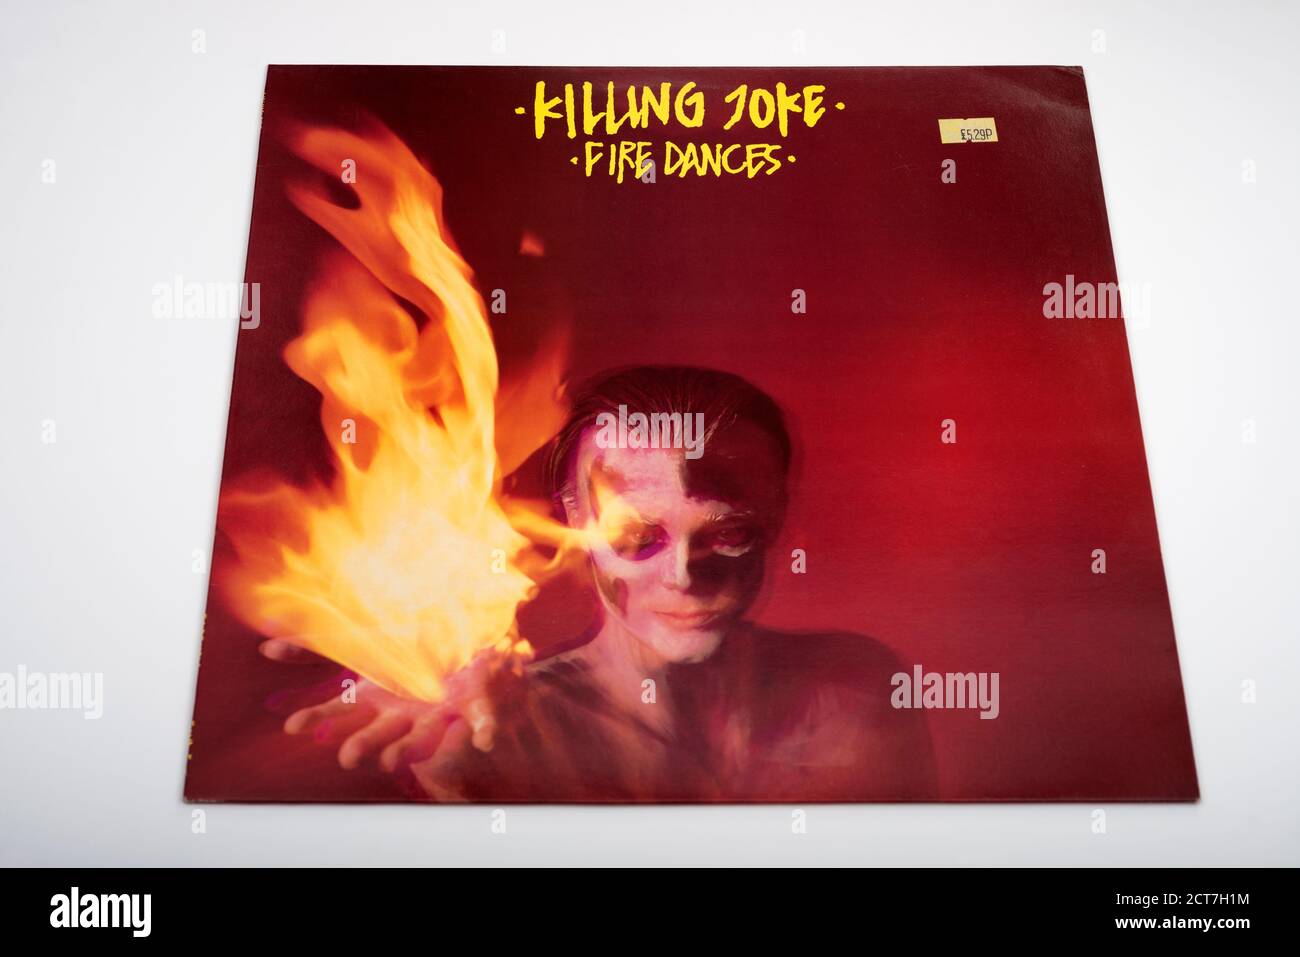 Killing Joke Fire Dancers LP record Banque D'Images